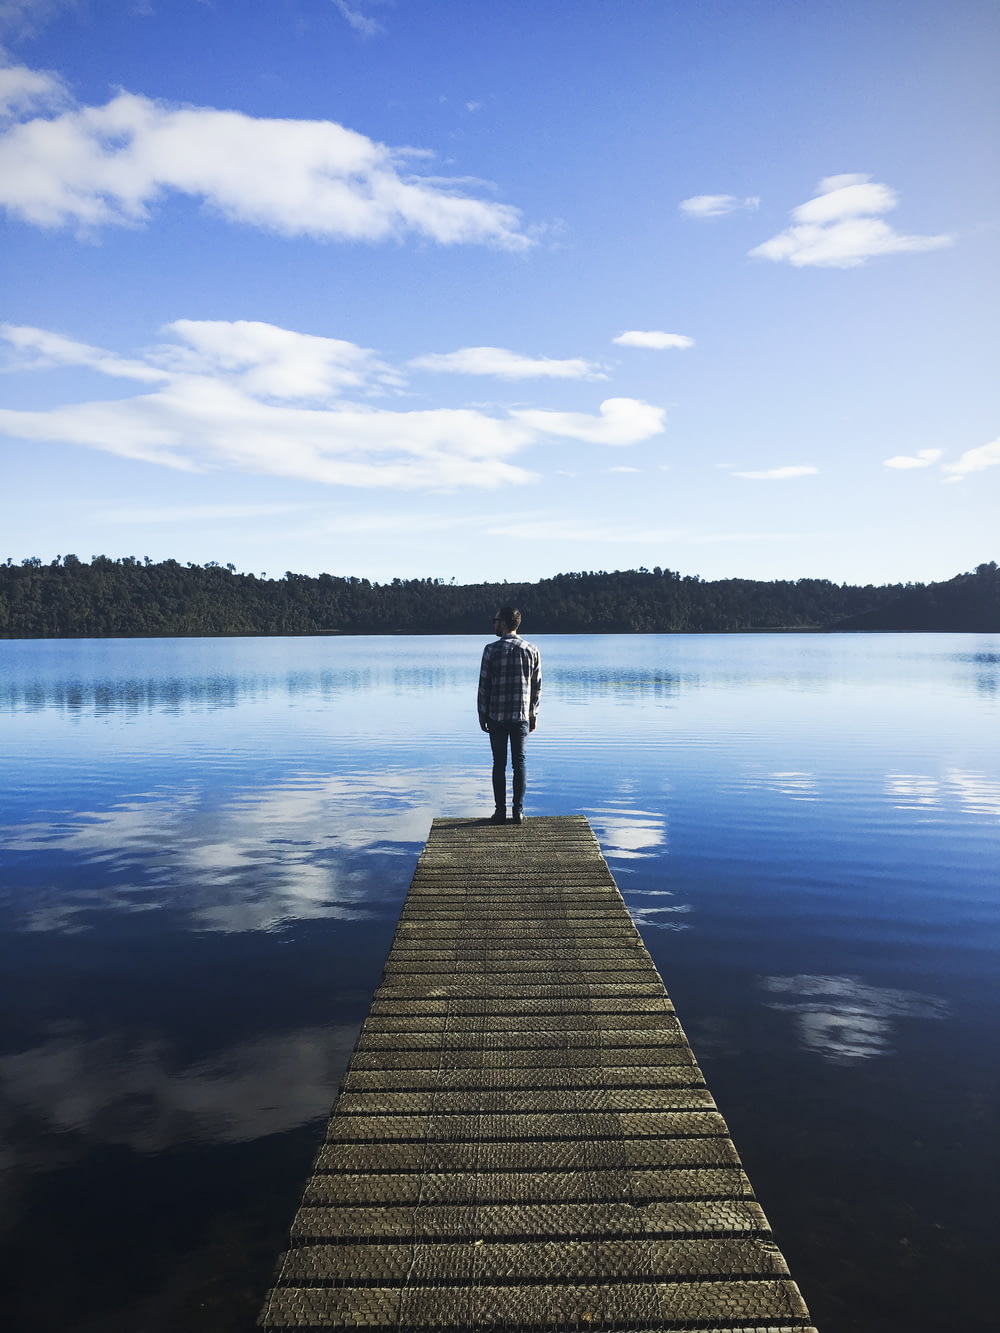 man standing on lake dock watching water under blue sky during daytime